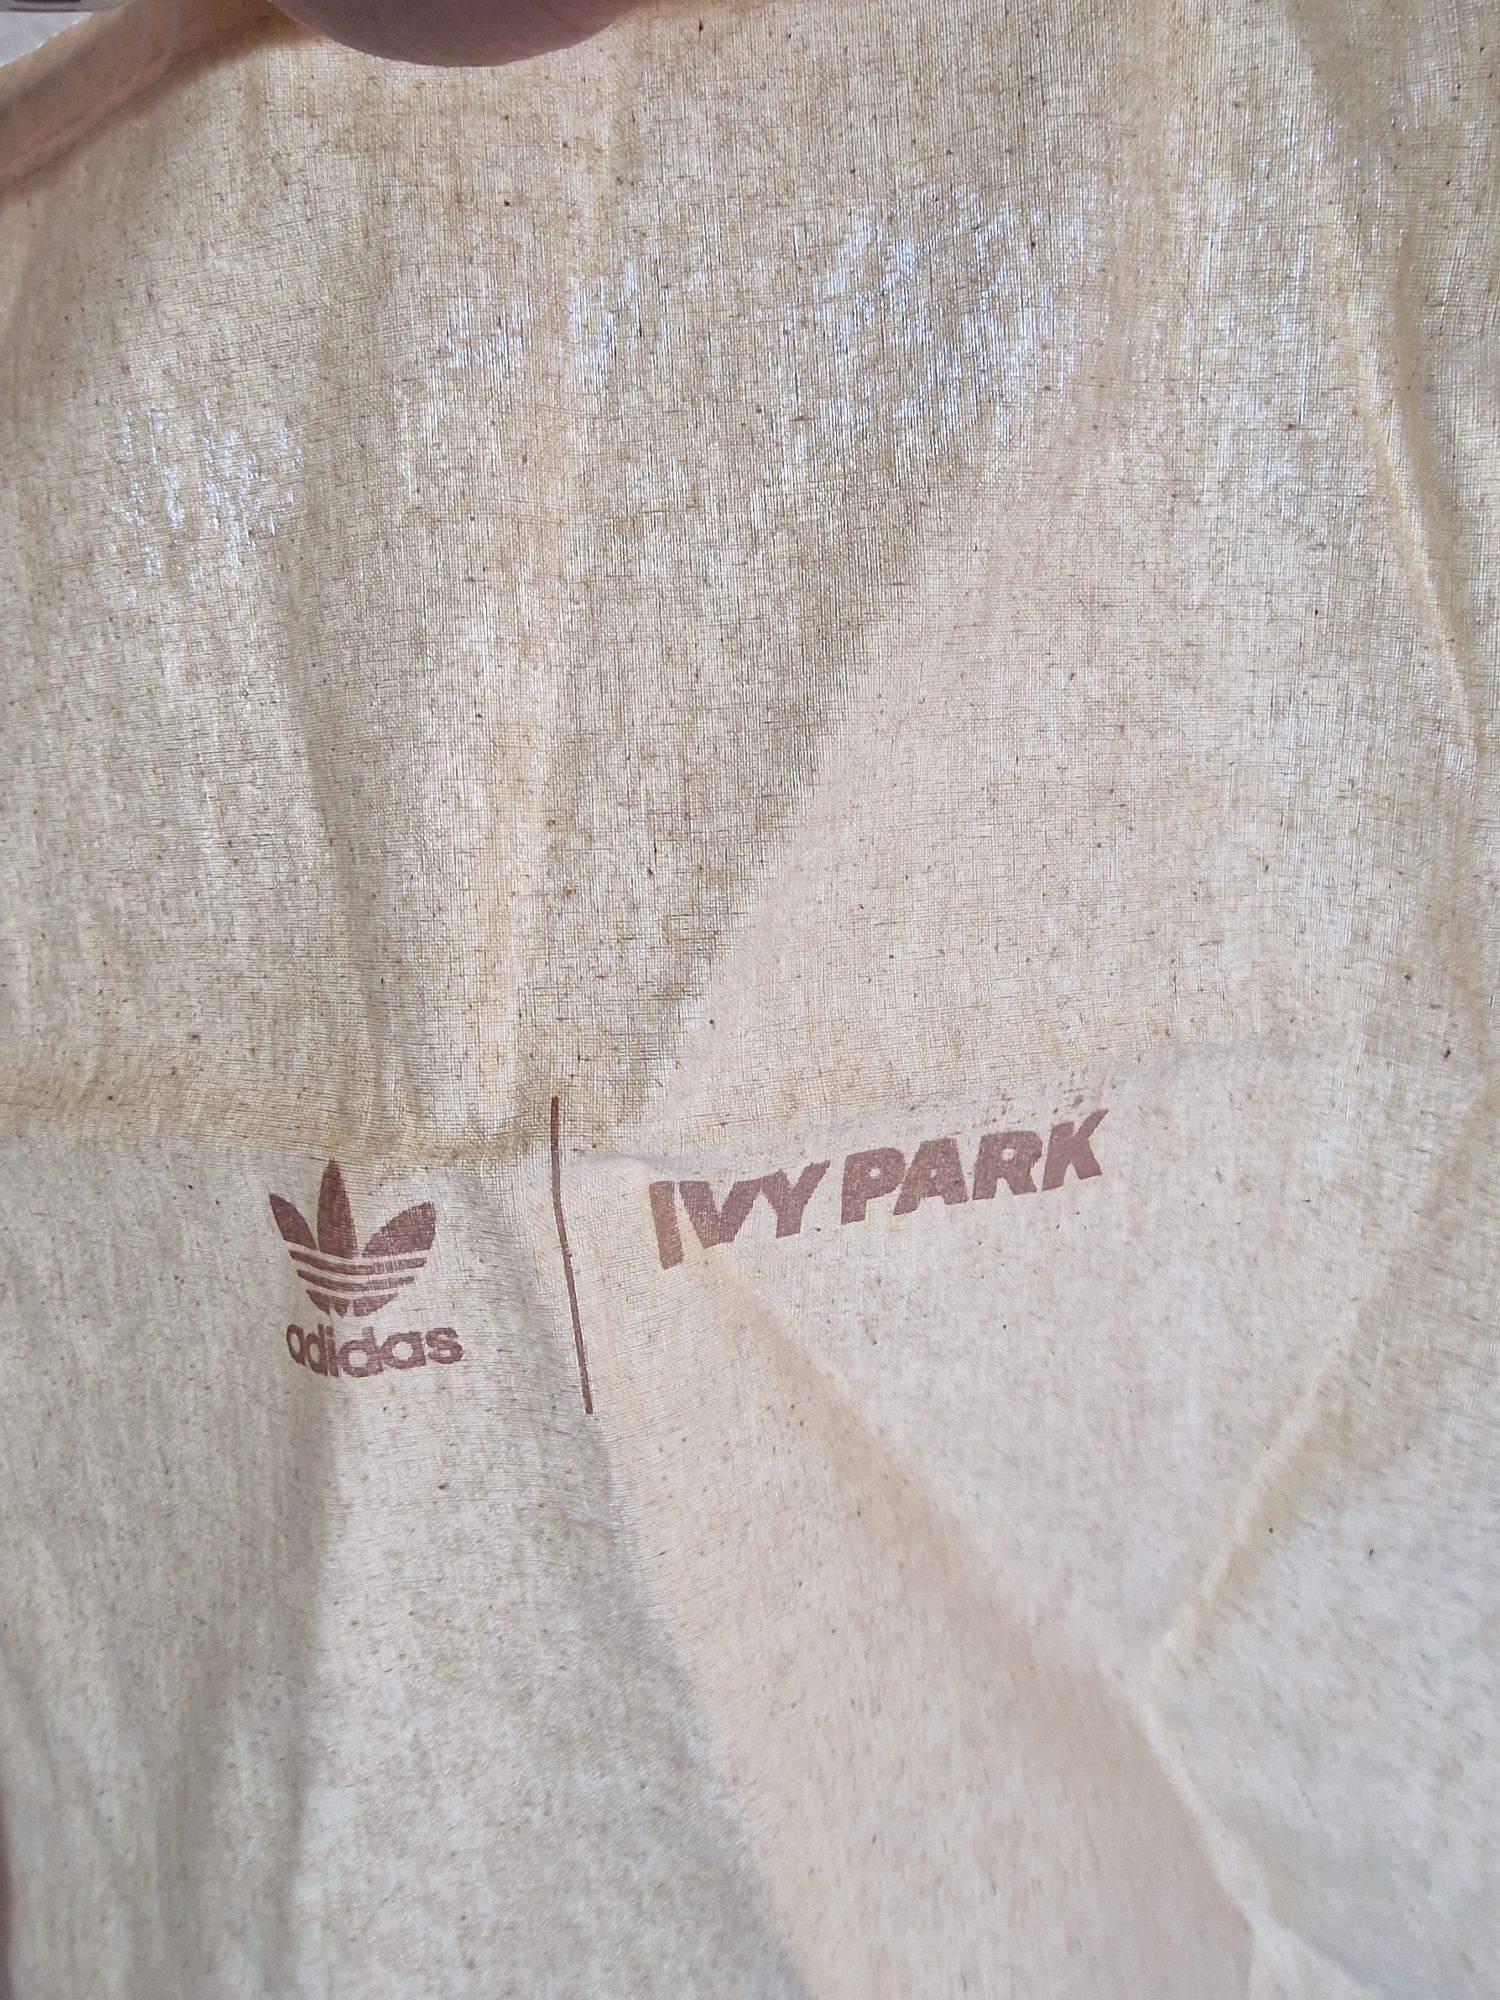 Vand Adidas Ultraboost x Ivy Park 38